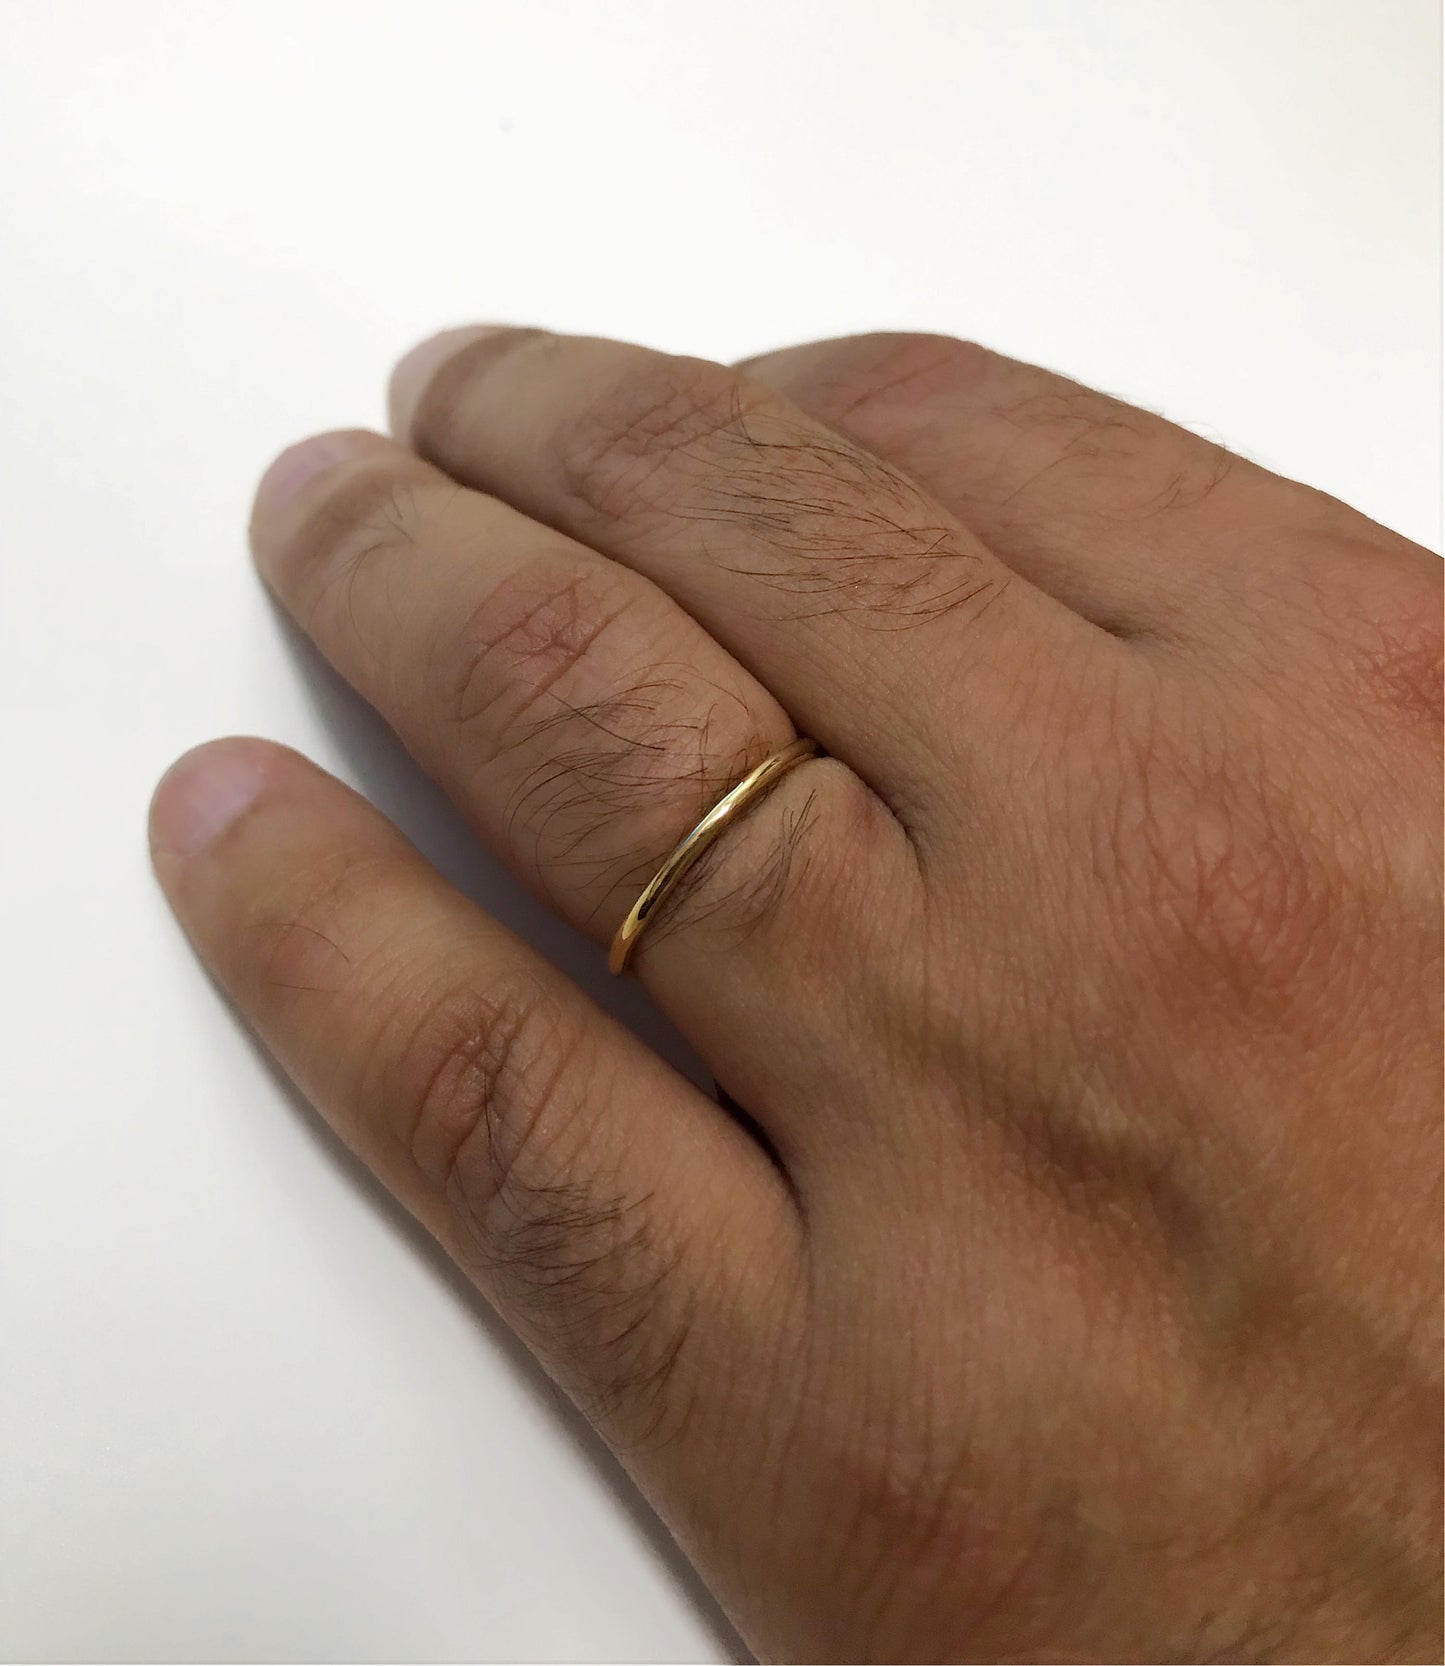 1.5mm Thin Gold Band - 14k White